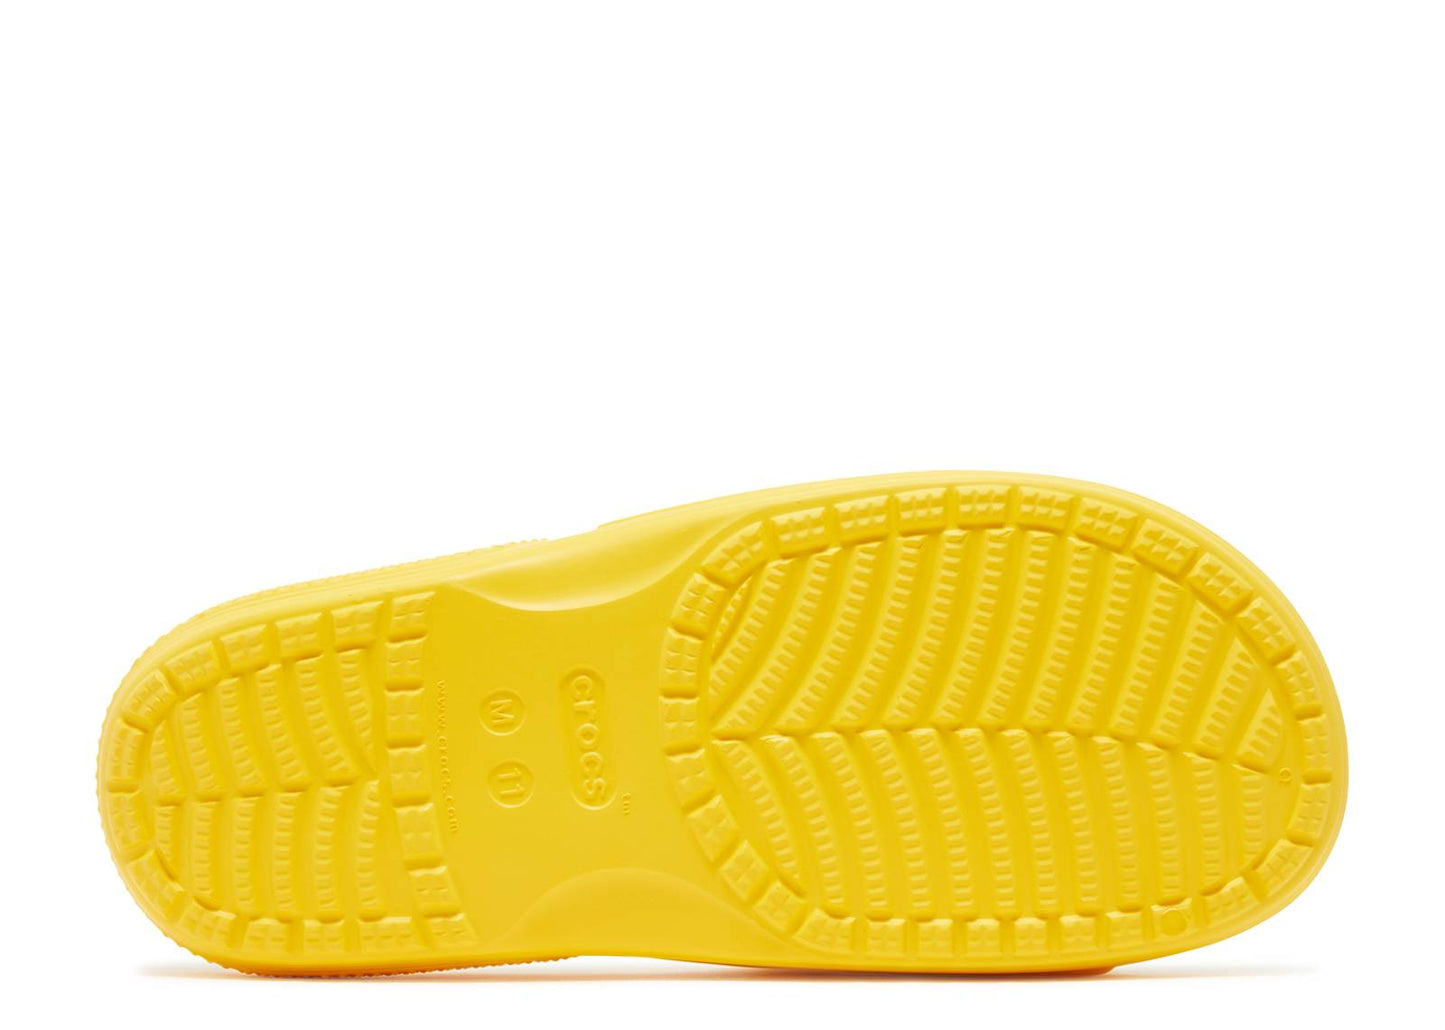 Wu-Tang Clan x Crocs Classic Slide " Yellow/Black"